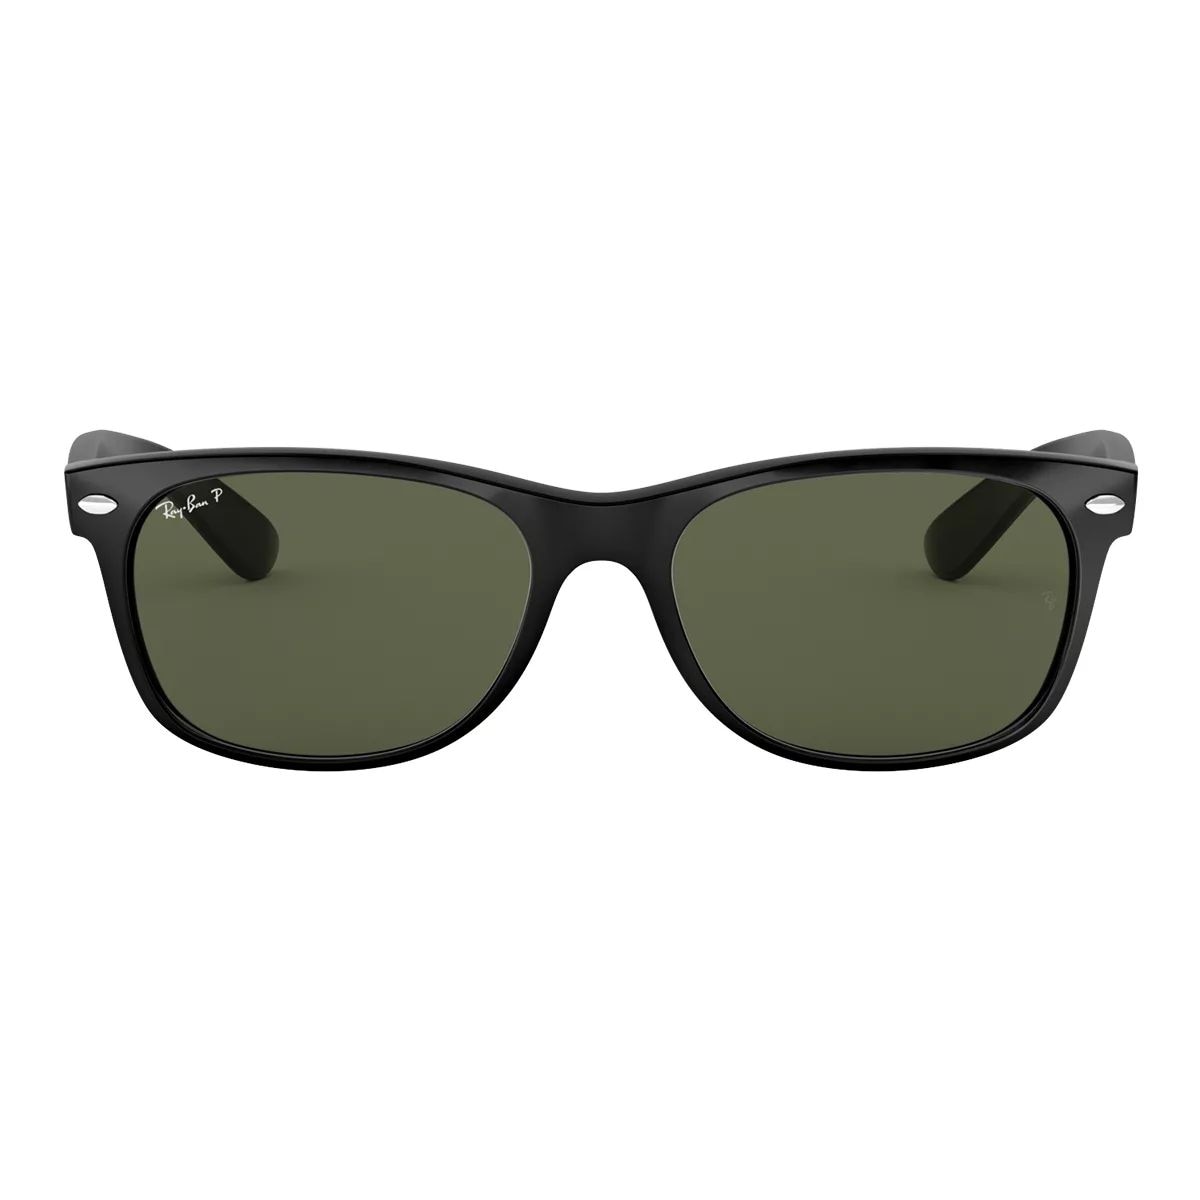 Image of Ray Ban Men's/Women's New Wayfarer Sunglasses Polarized